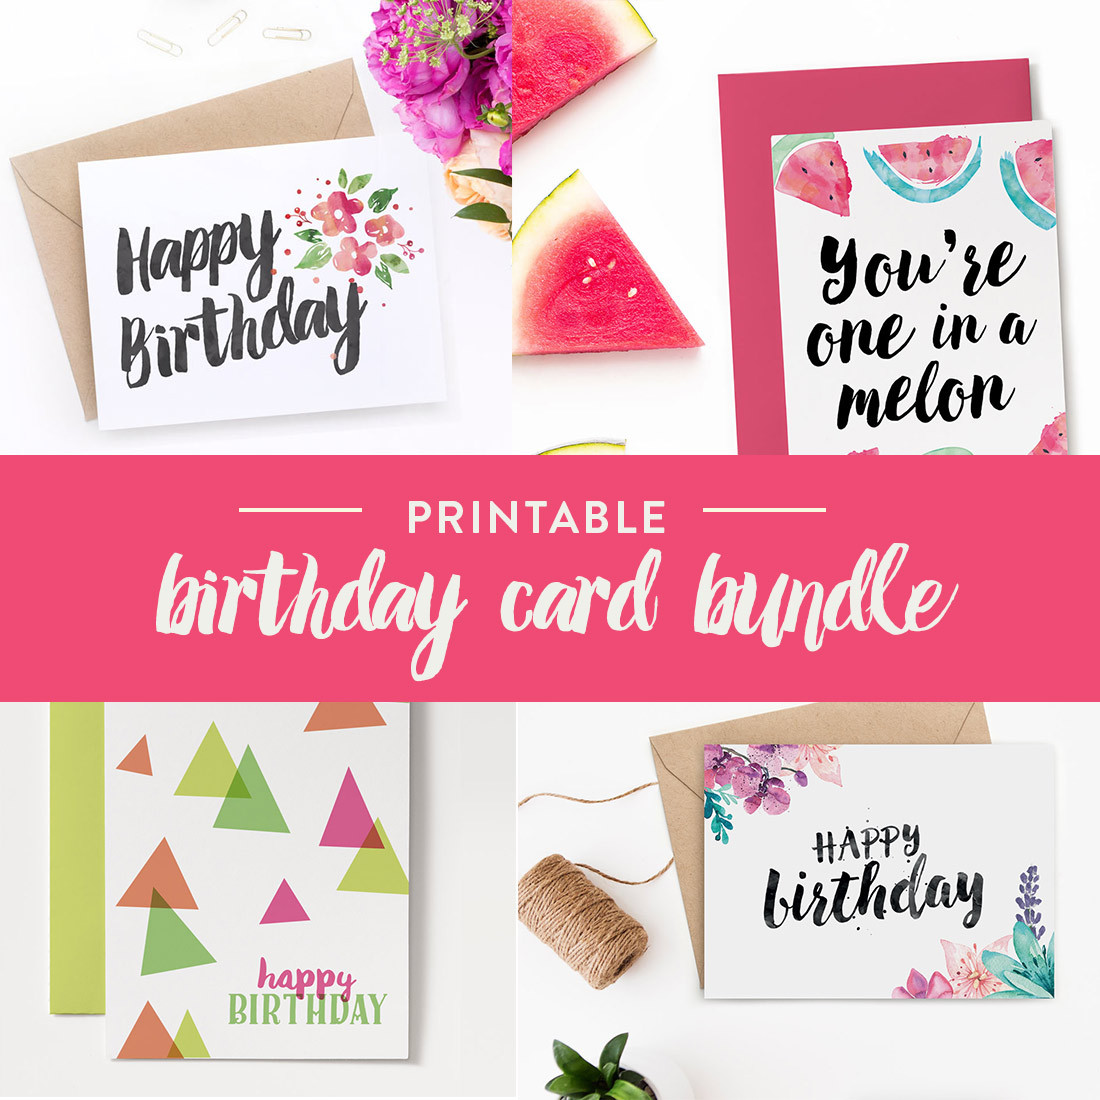 Happy Birthday Printable Cards
 Printable Birthday Cards – Bundle